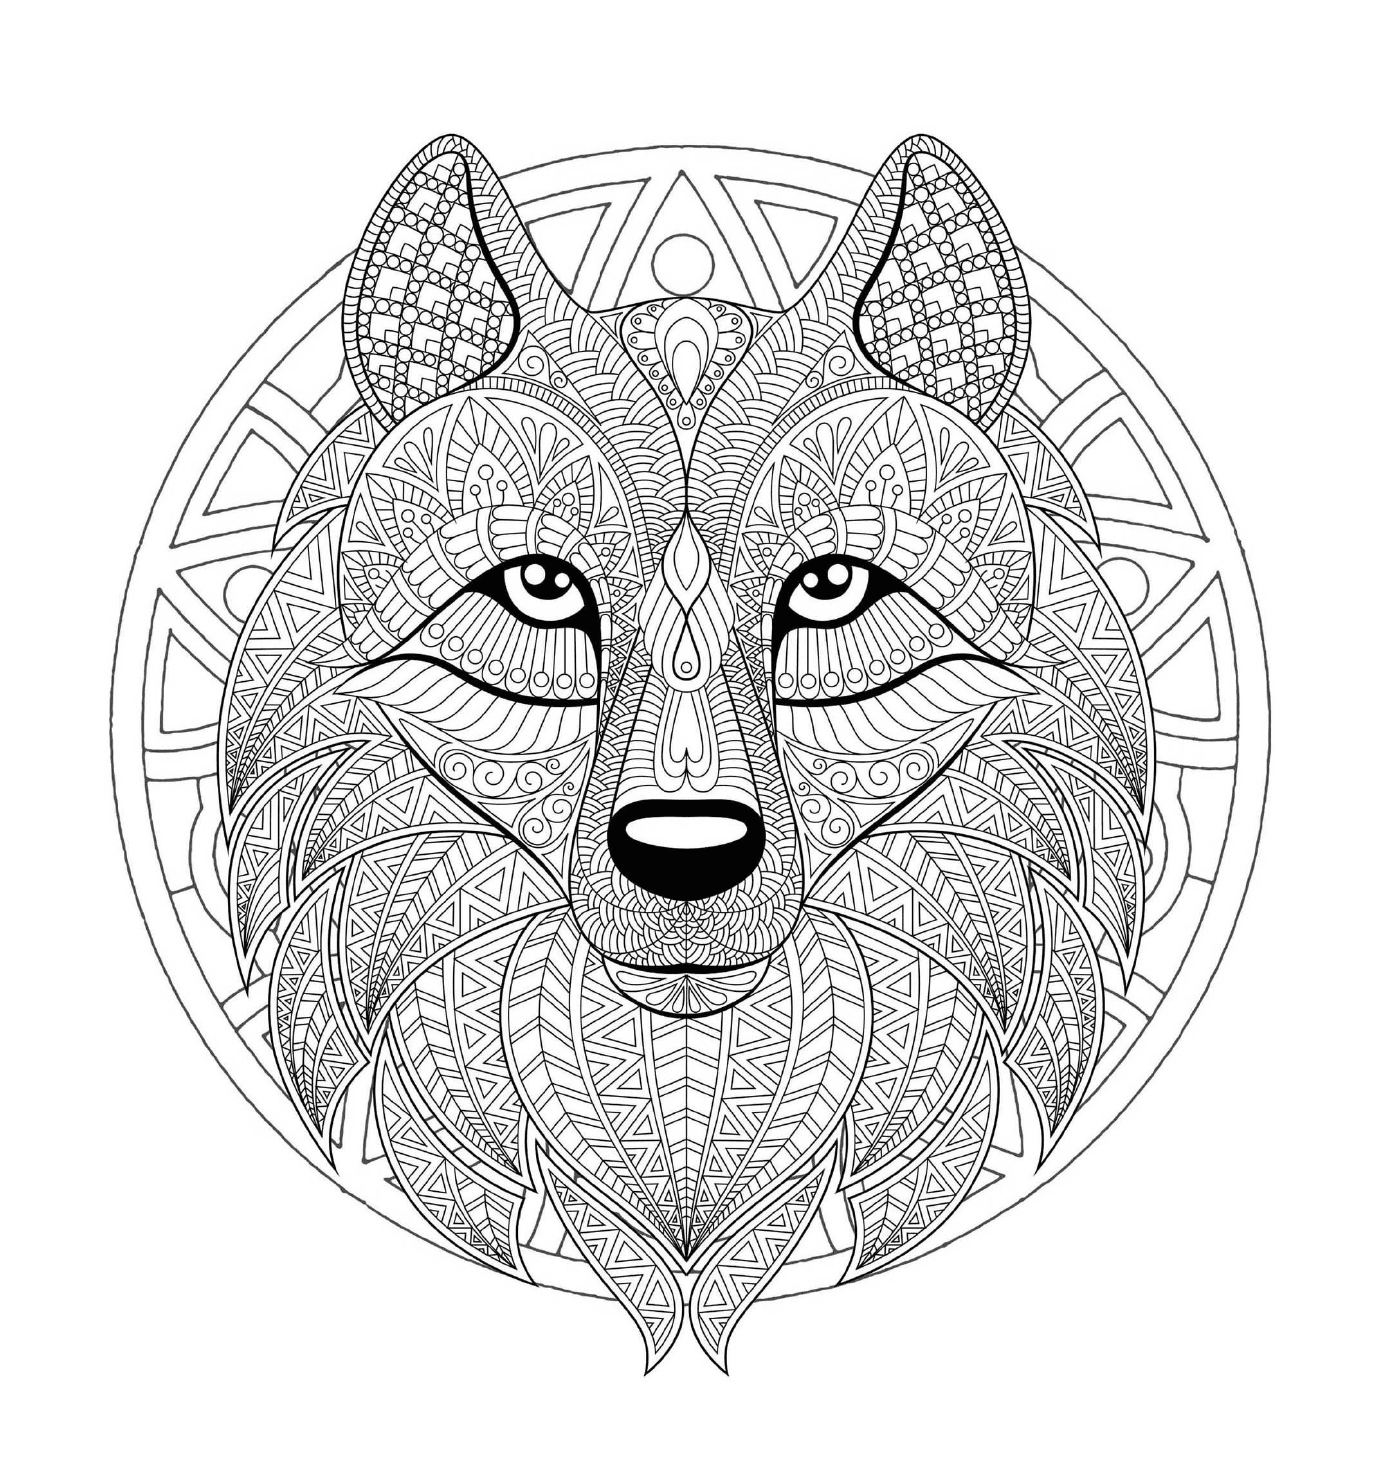  Wolfhead in a complex mandala 